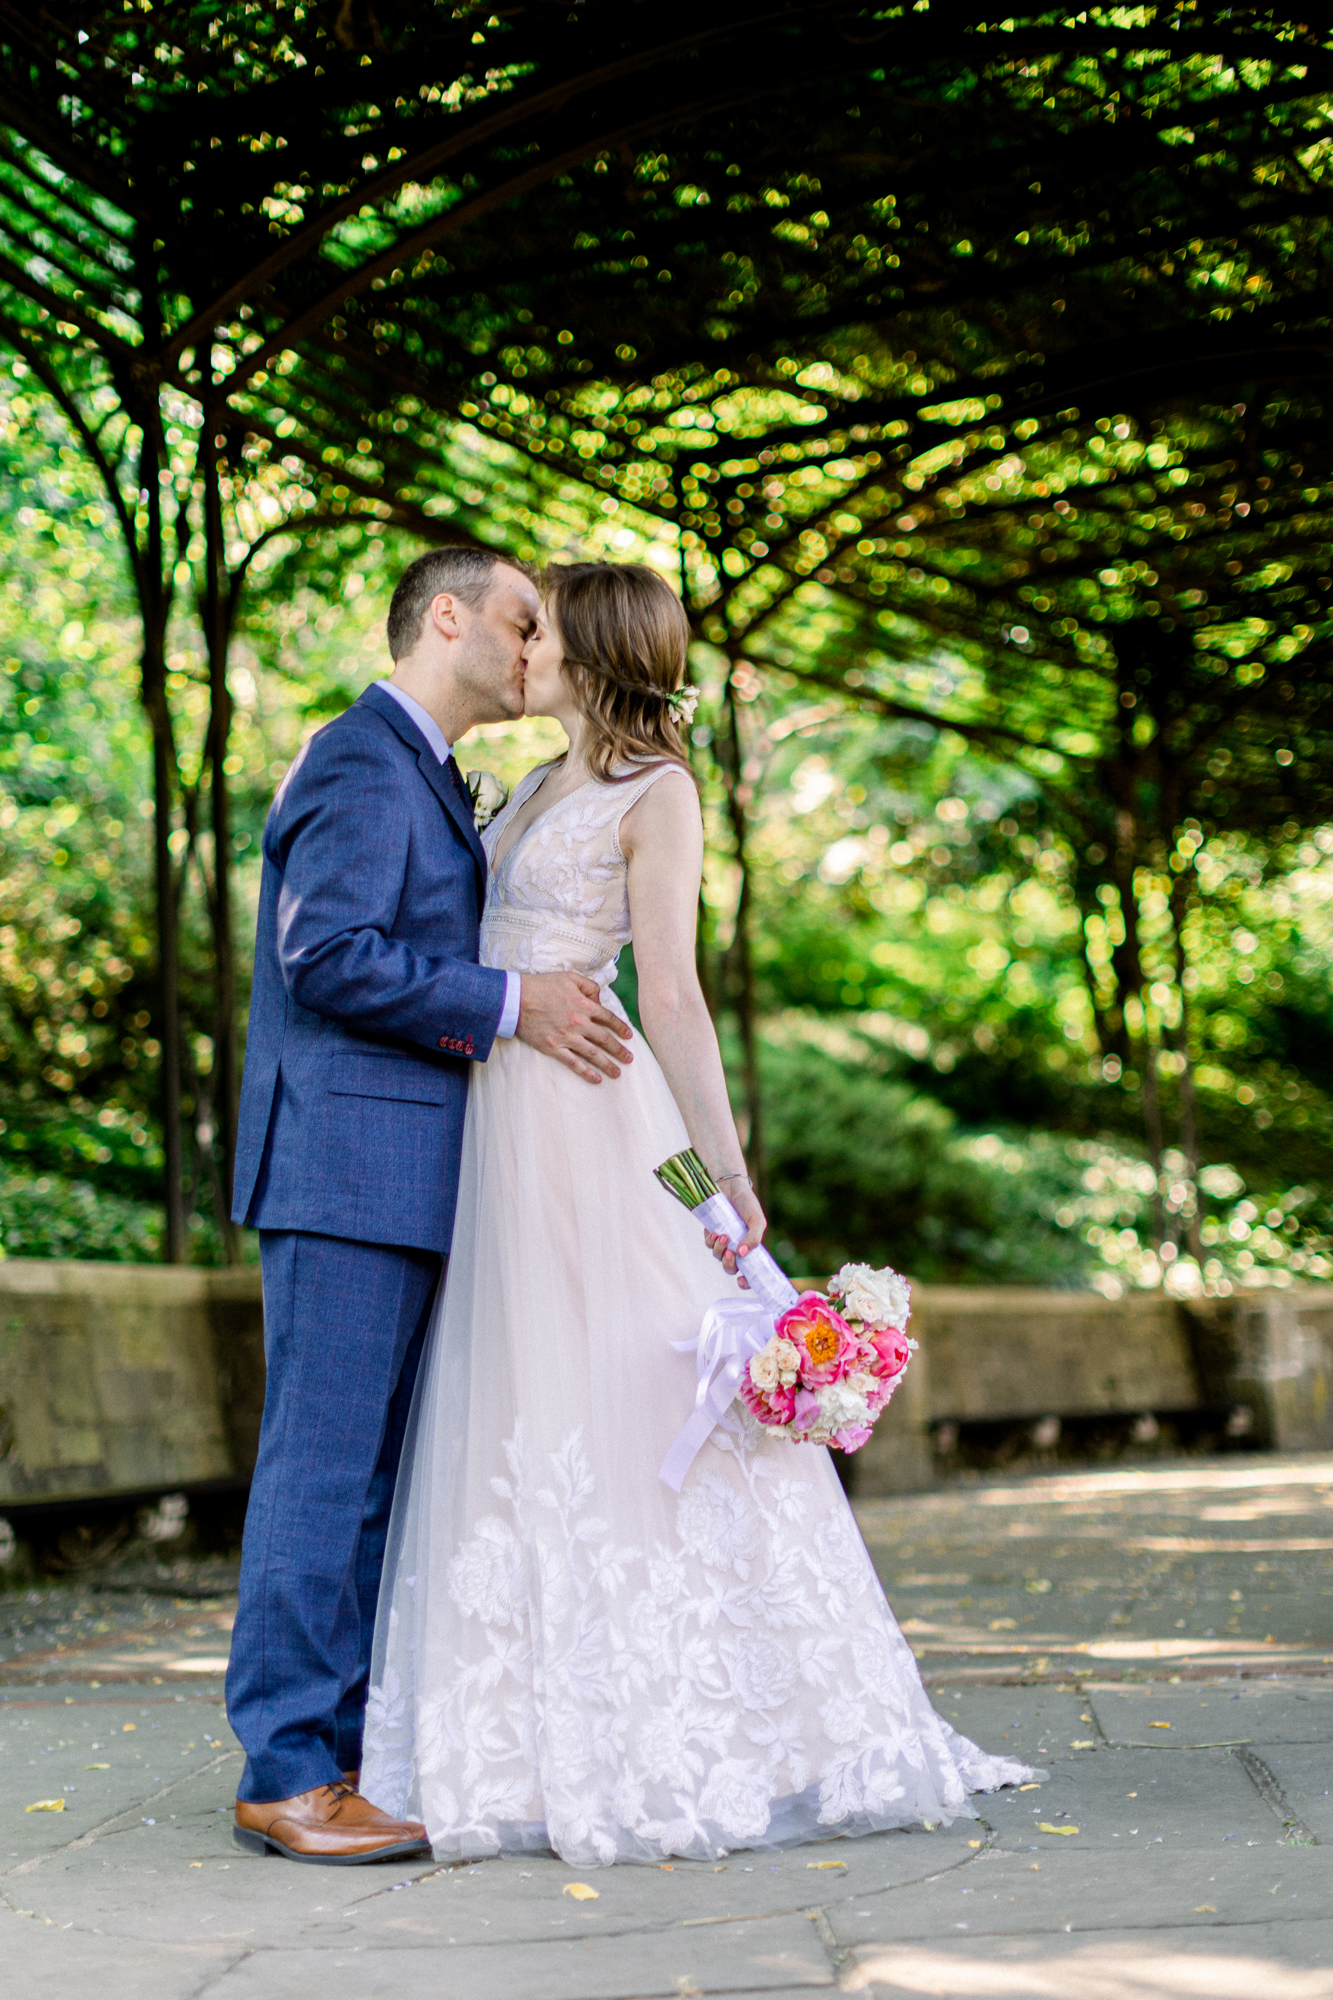 Vivid Summer Wedding Photos at the Conservatory Garden in Central Park New York